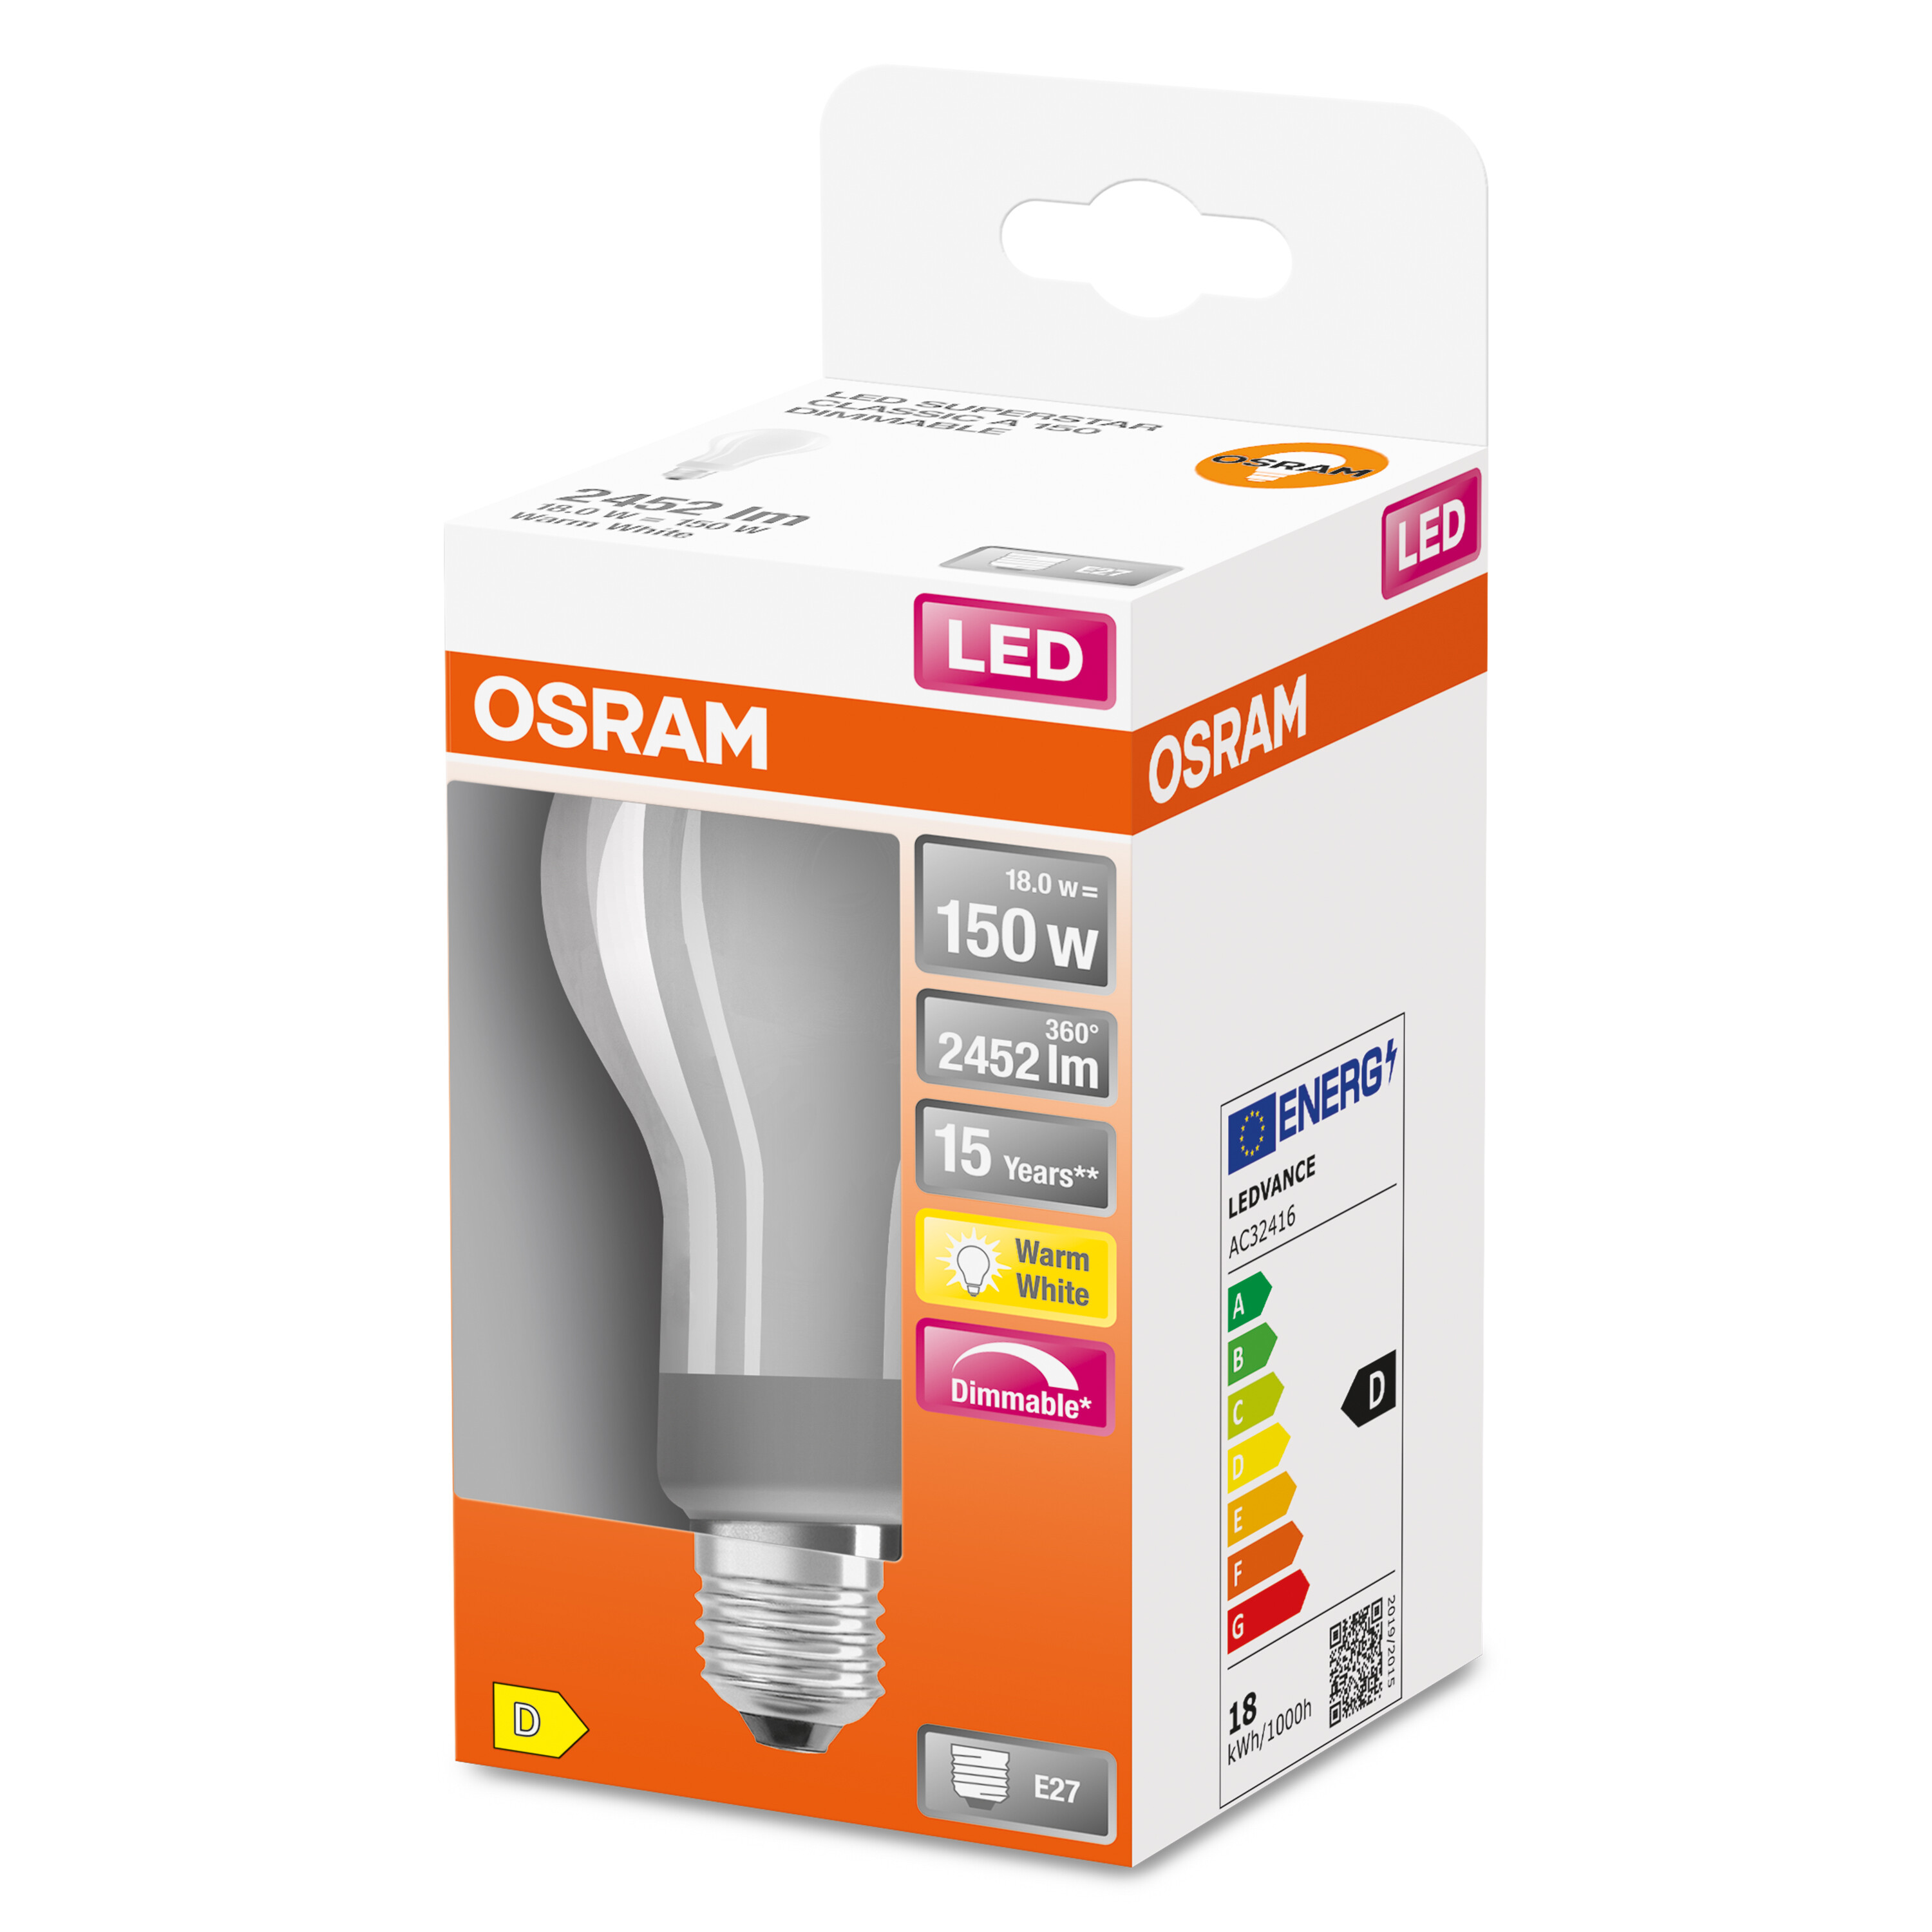 OSRAM  LED SUPERSTAR CLASSIC A LED 2452 Lumen Kaltweiß Lampe